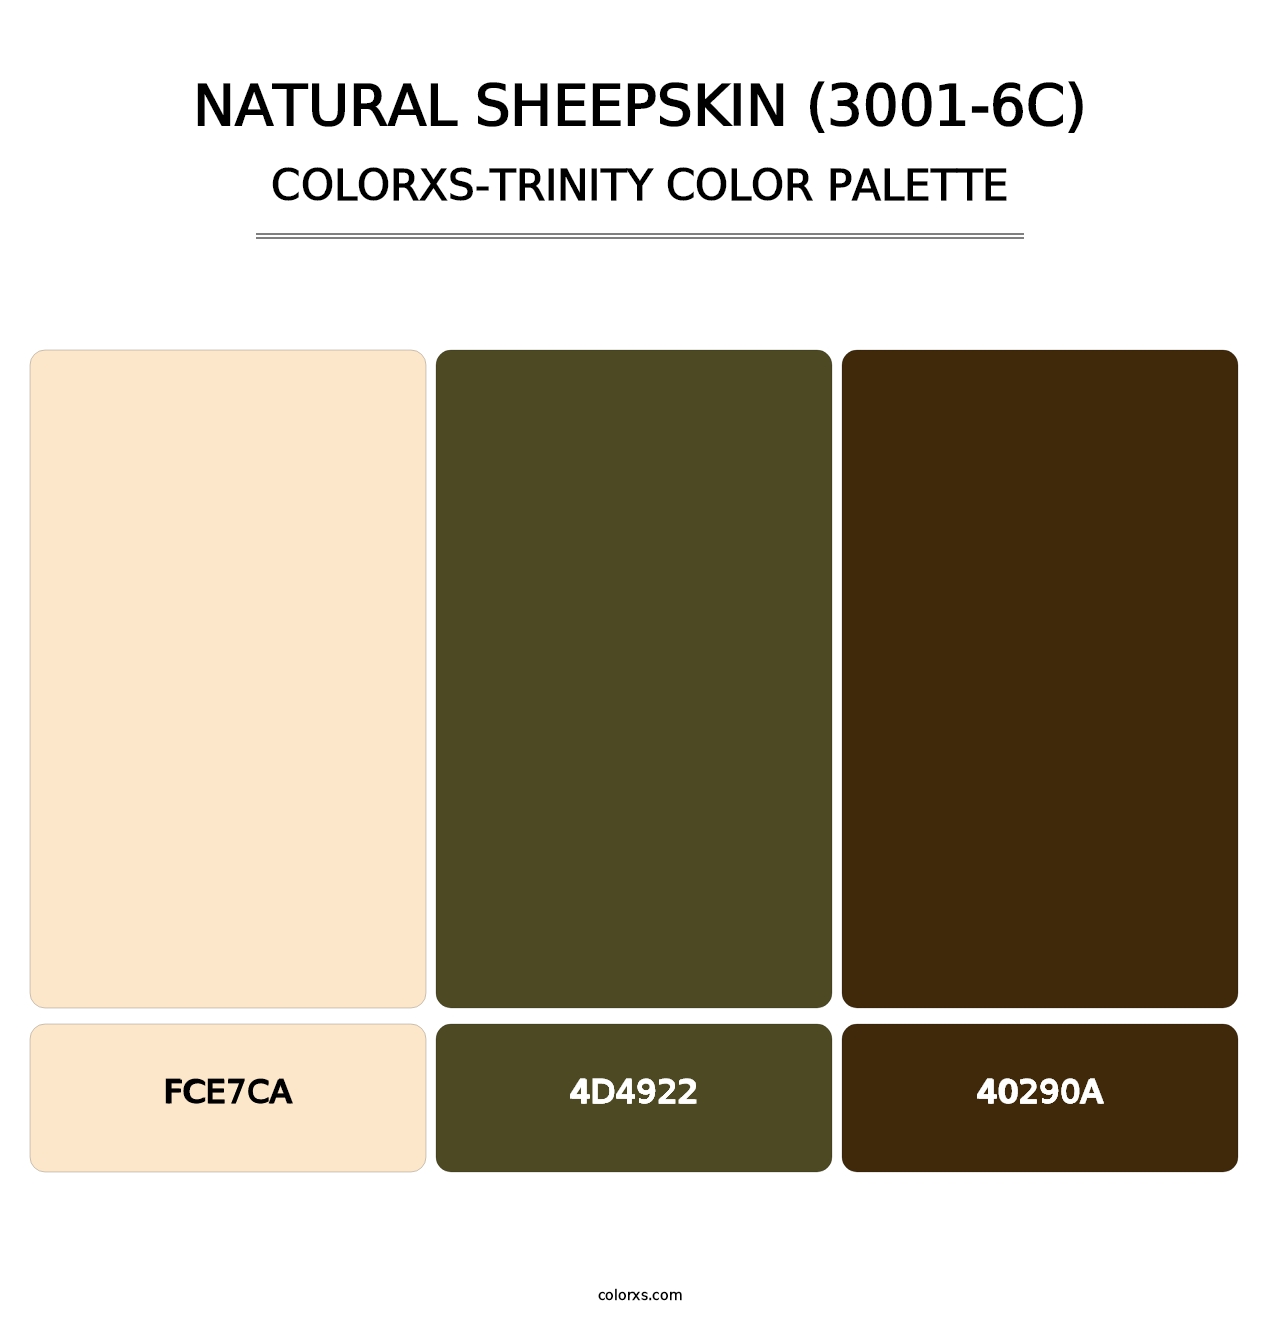 Natural Sheepskin (3001-6C) - Colorxs Trinity Palette